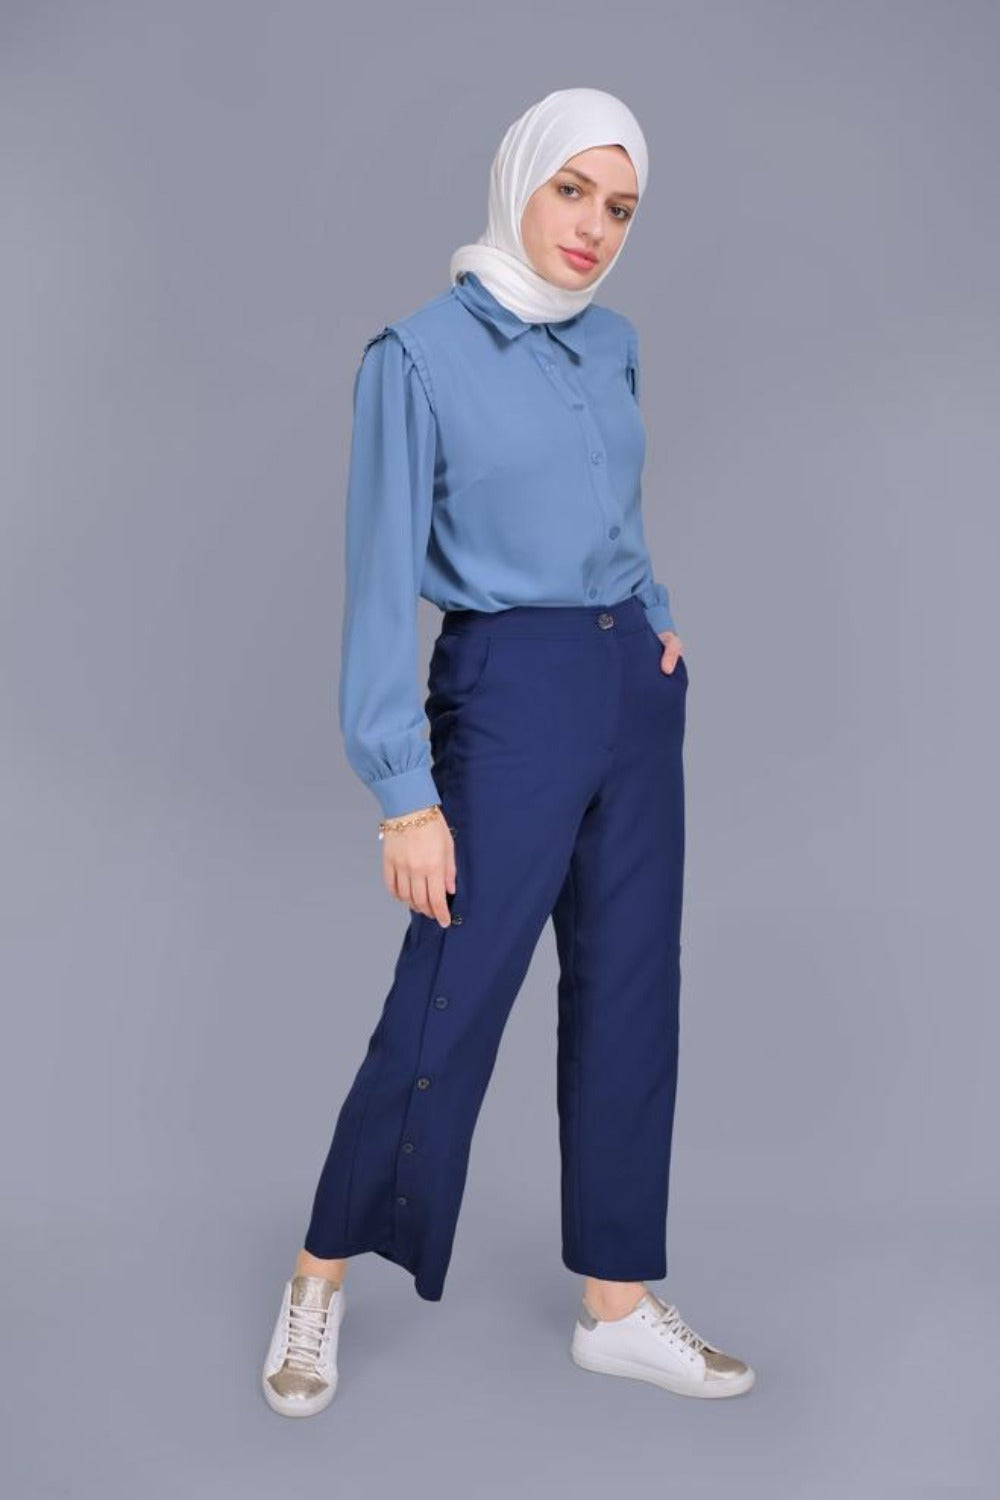 ‘MAYBELLA’ Buttoned Flowy Pants| Navy Pants Dana Fashion 